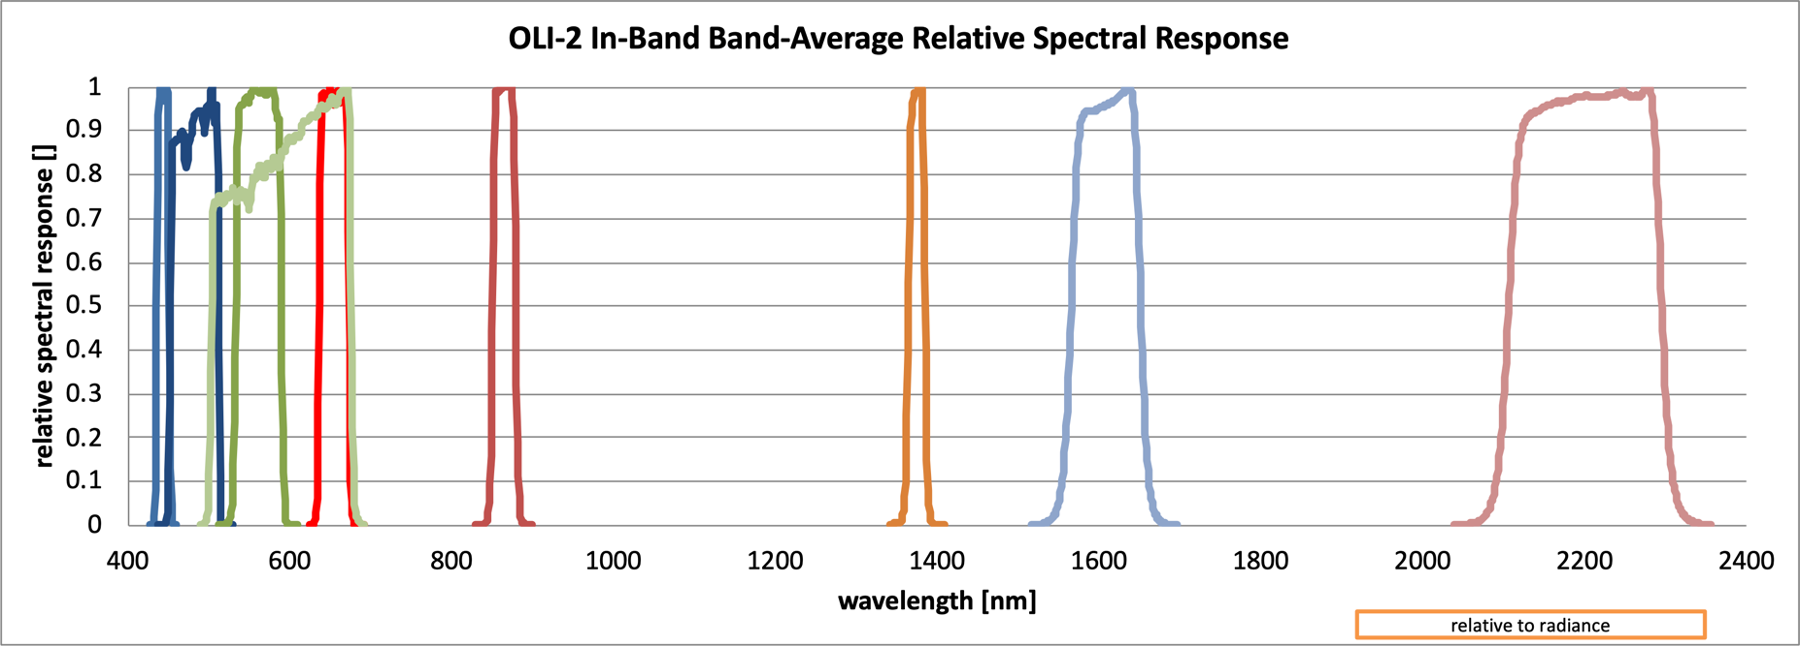 The band-average relative spectral radiance responses of OLI-2